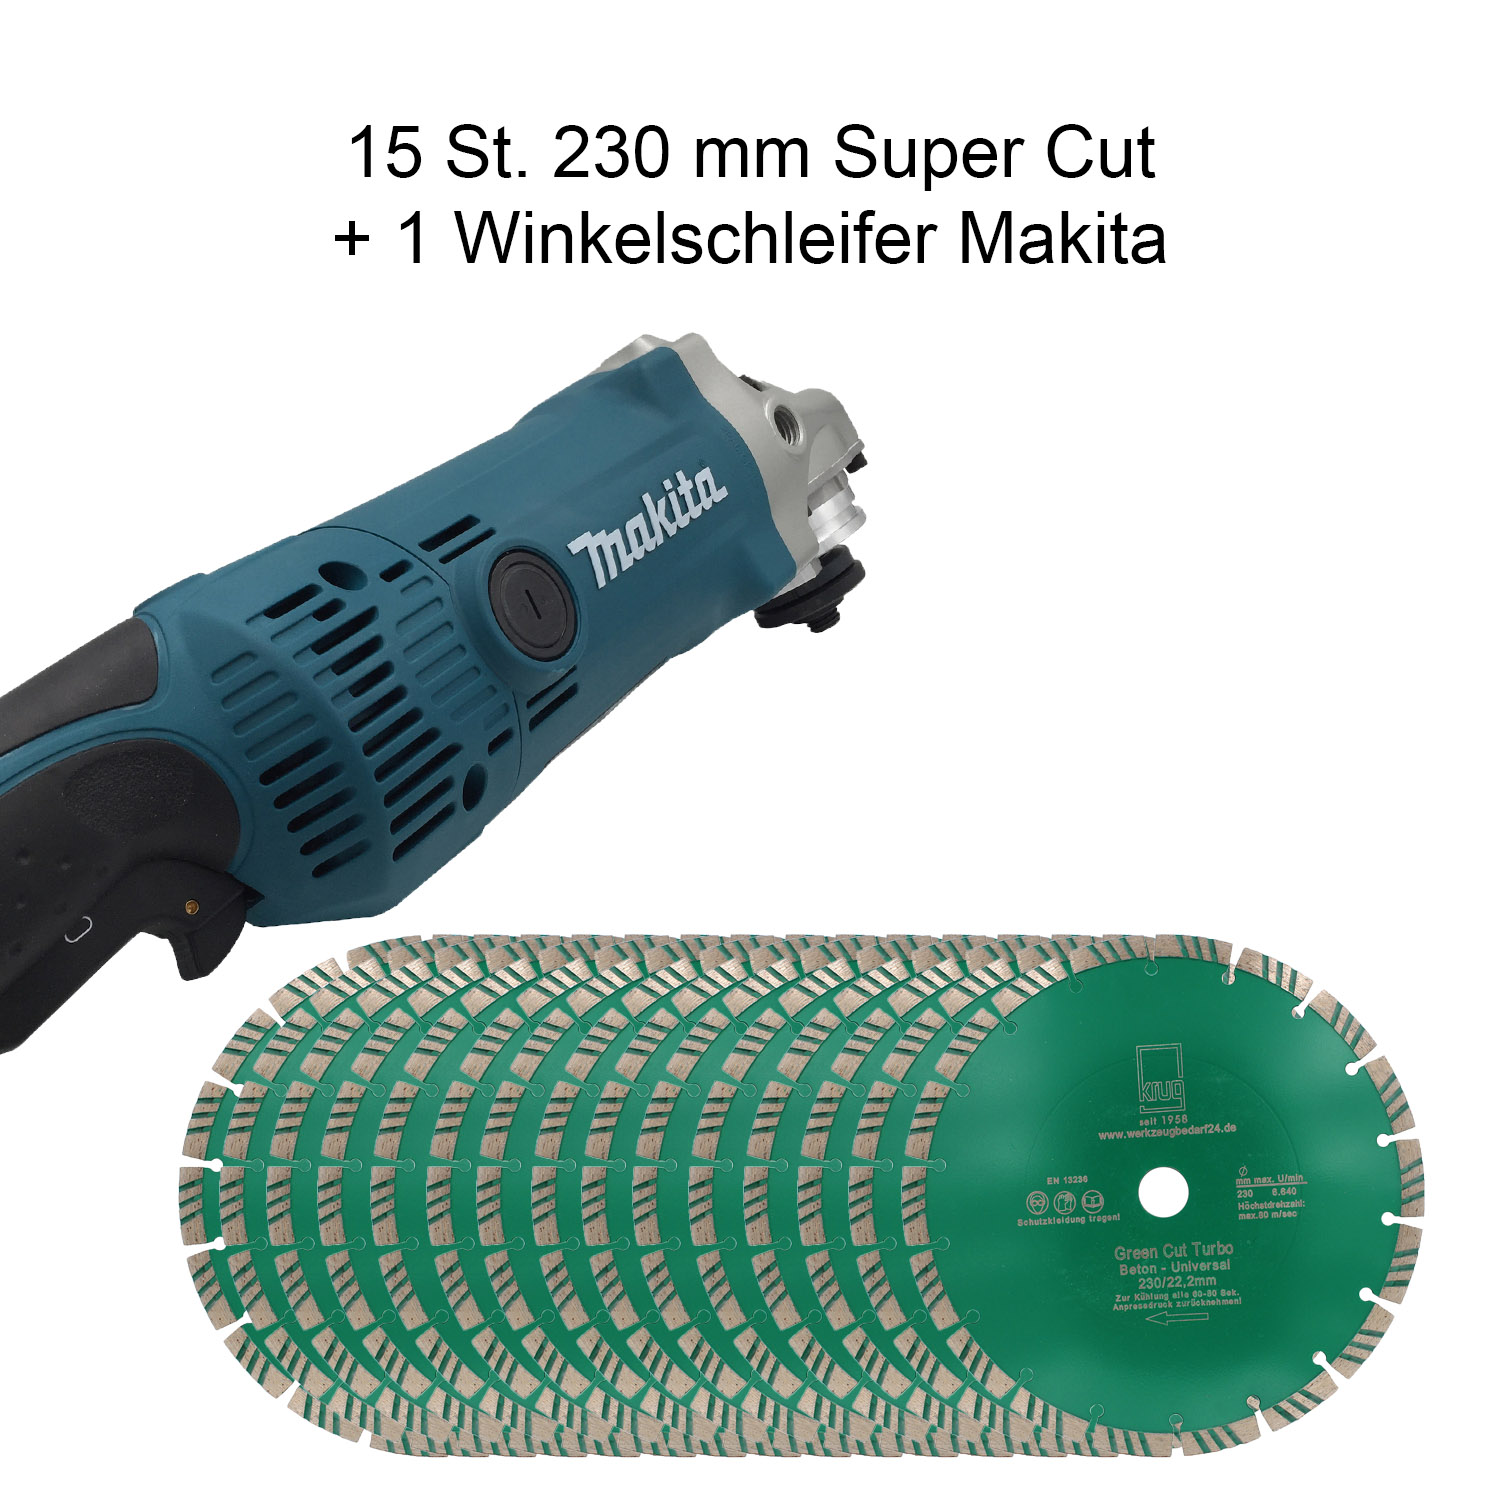 Set Makita Winkelschleifer GA9050R + 15 Stück Diamanttrennscheibe Super Cut 230 mm